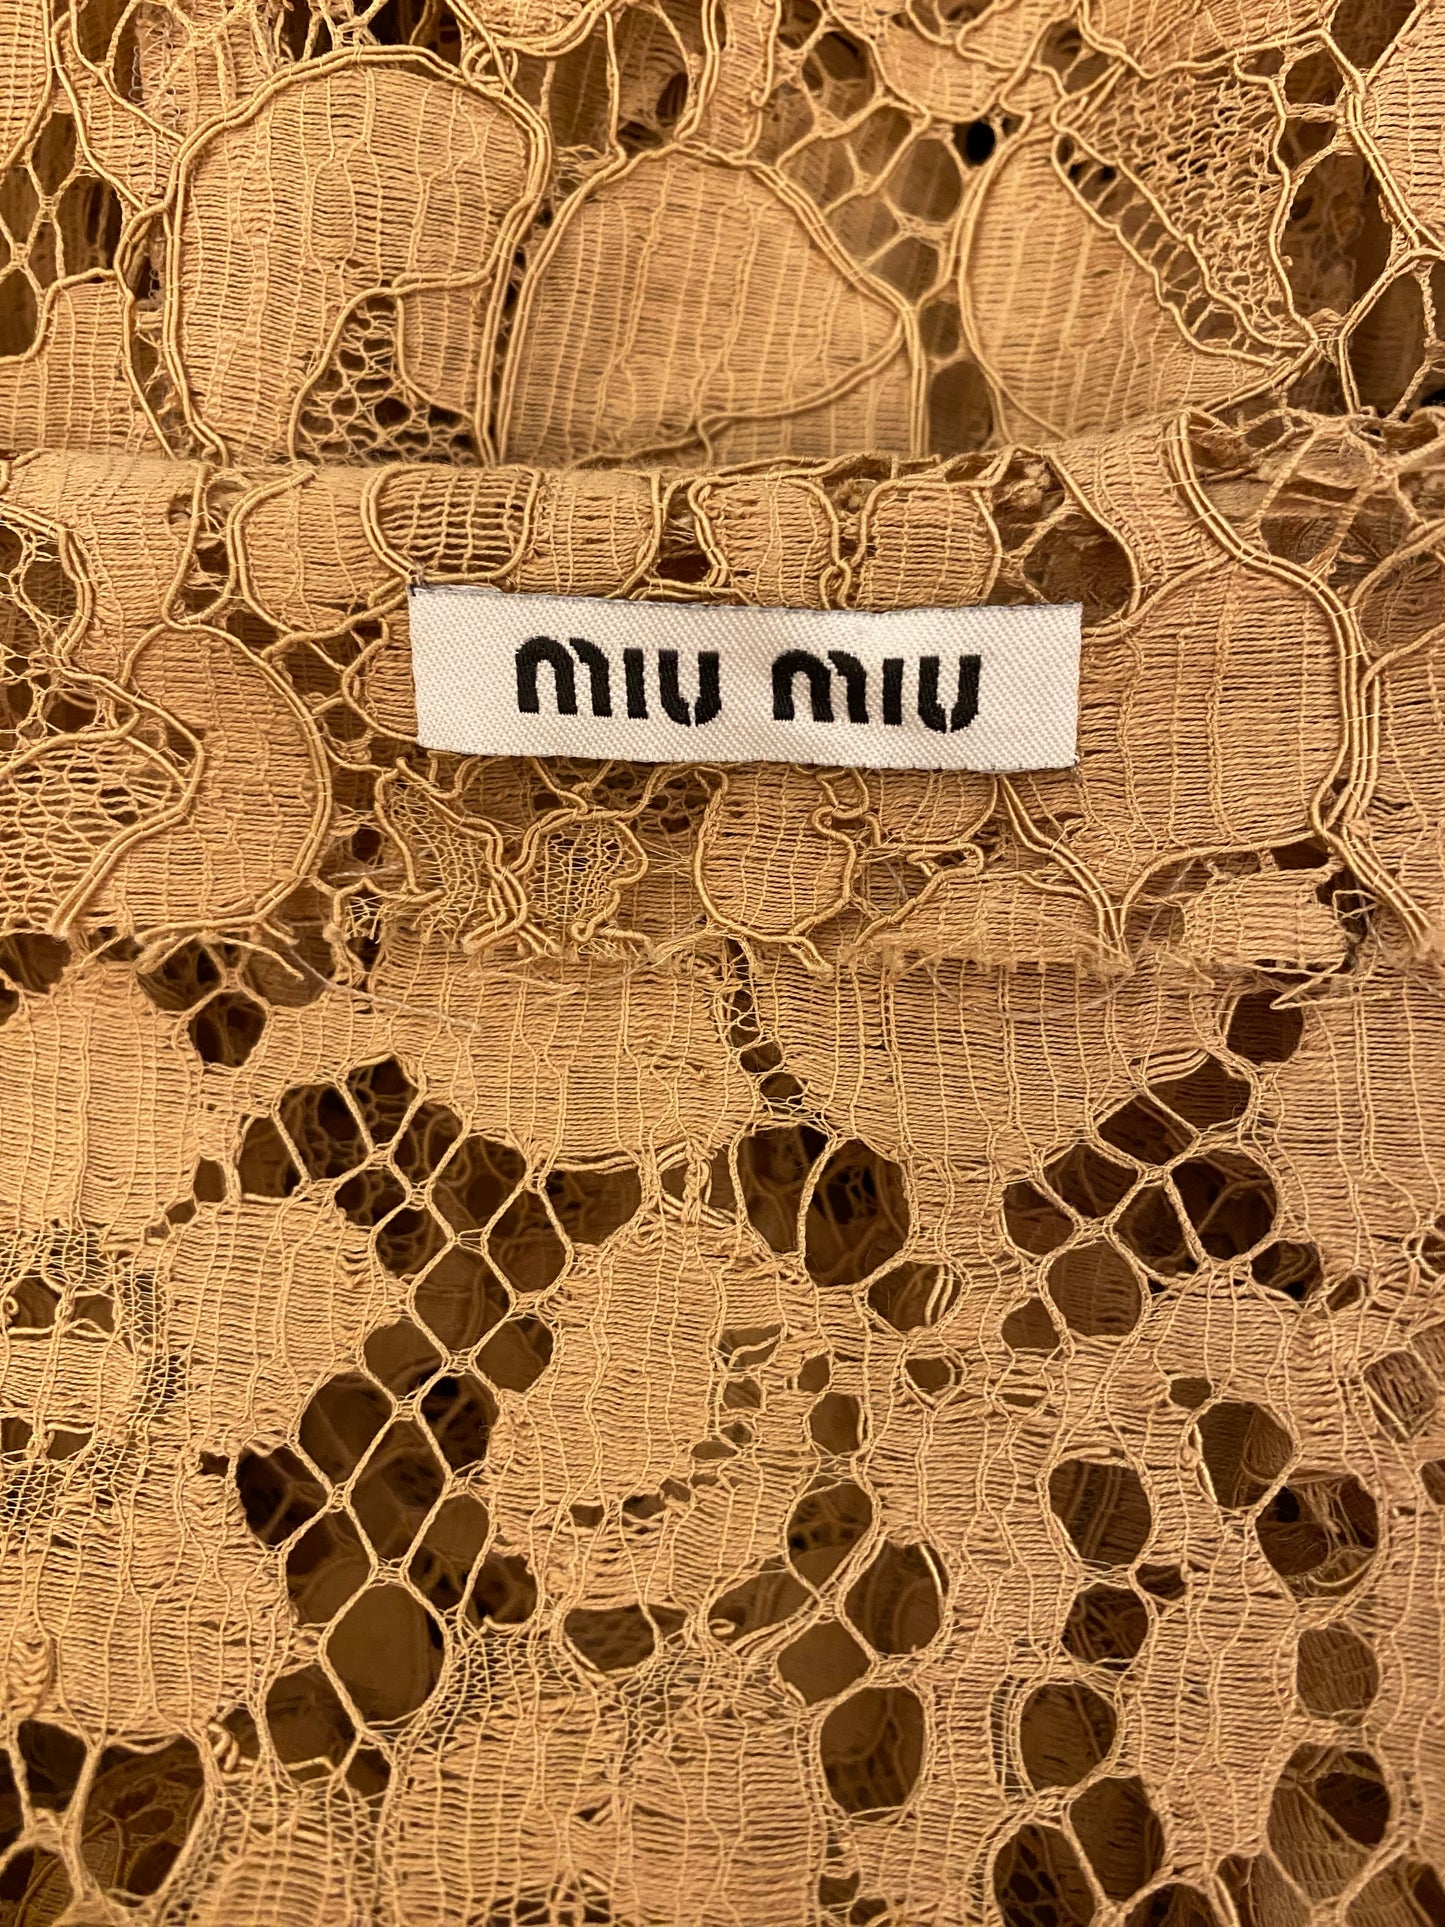 MIU MIU Lace Coat/ Dress Size M